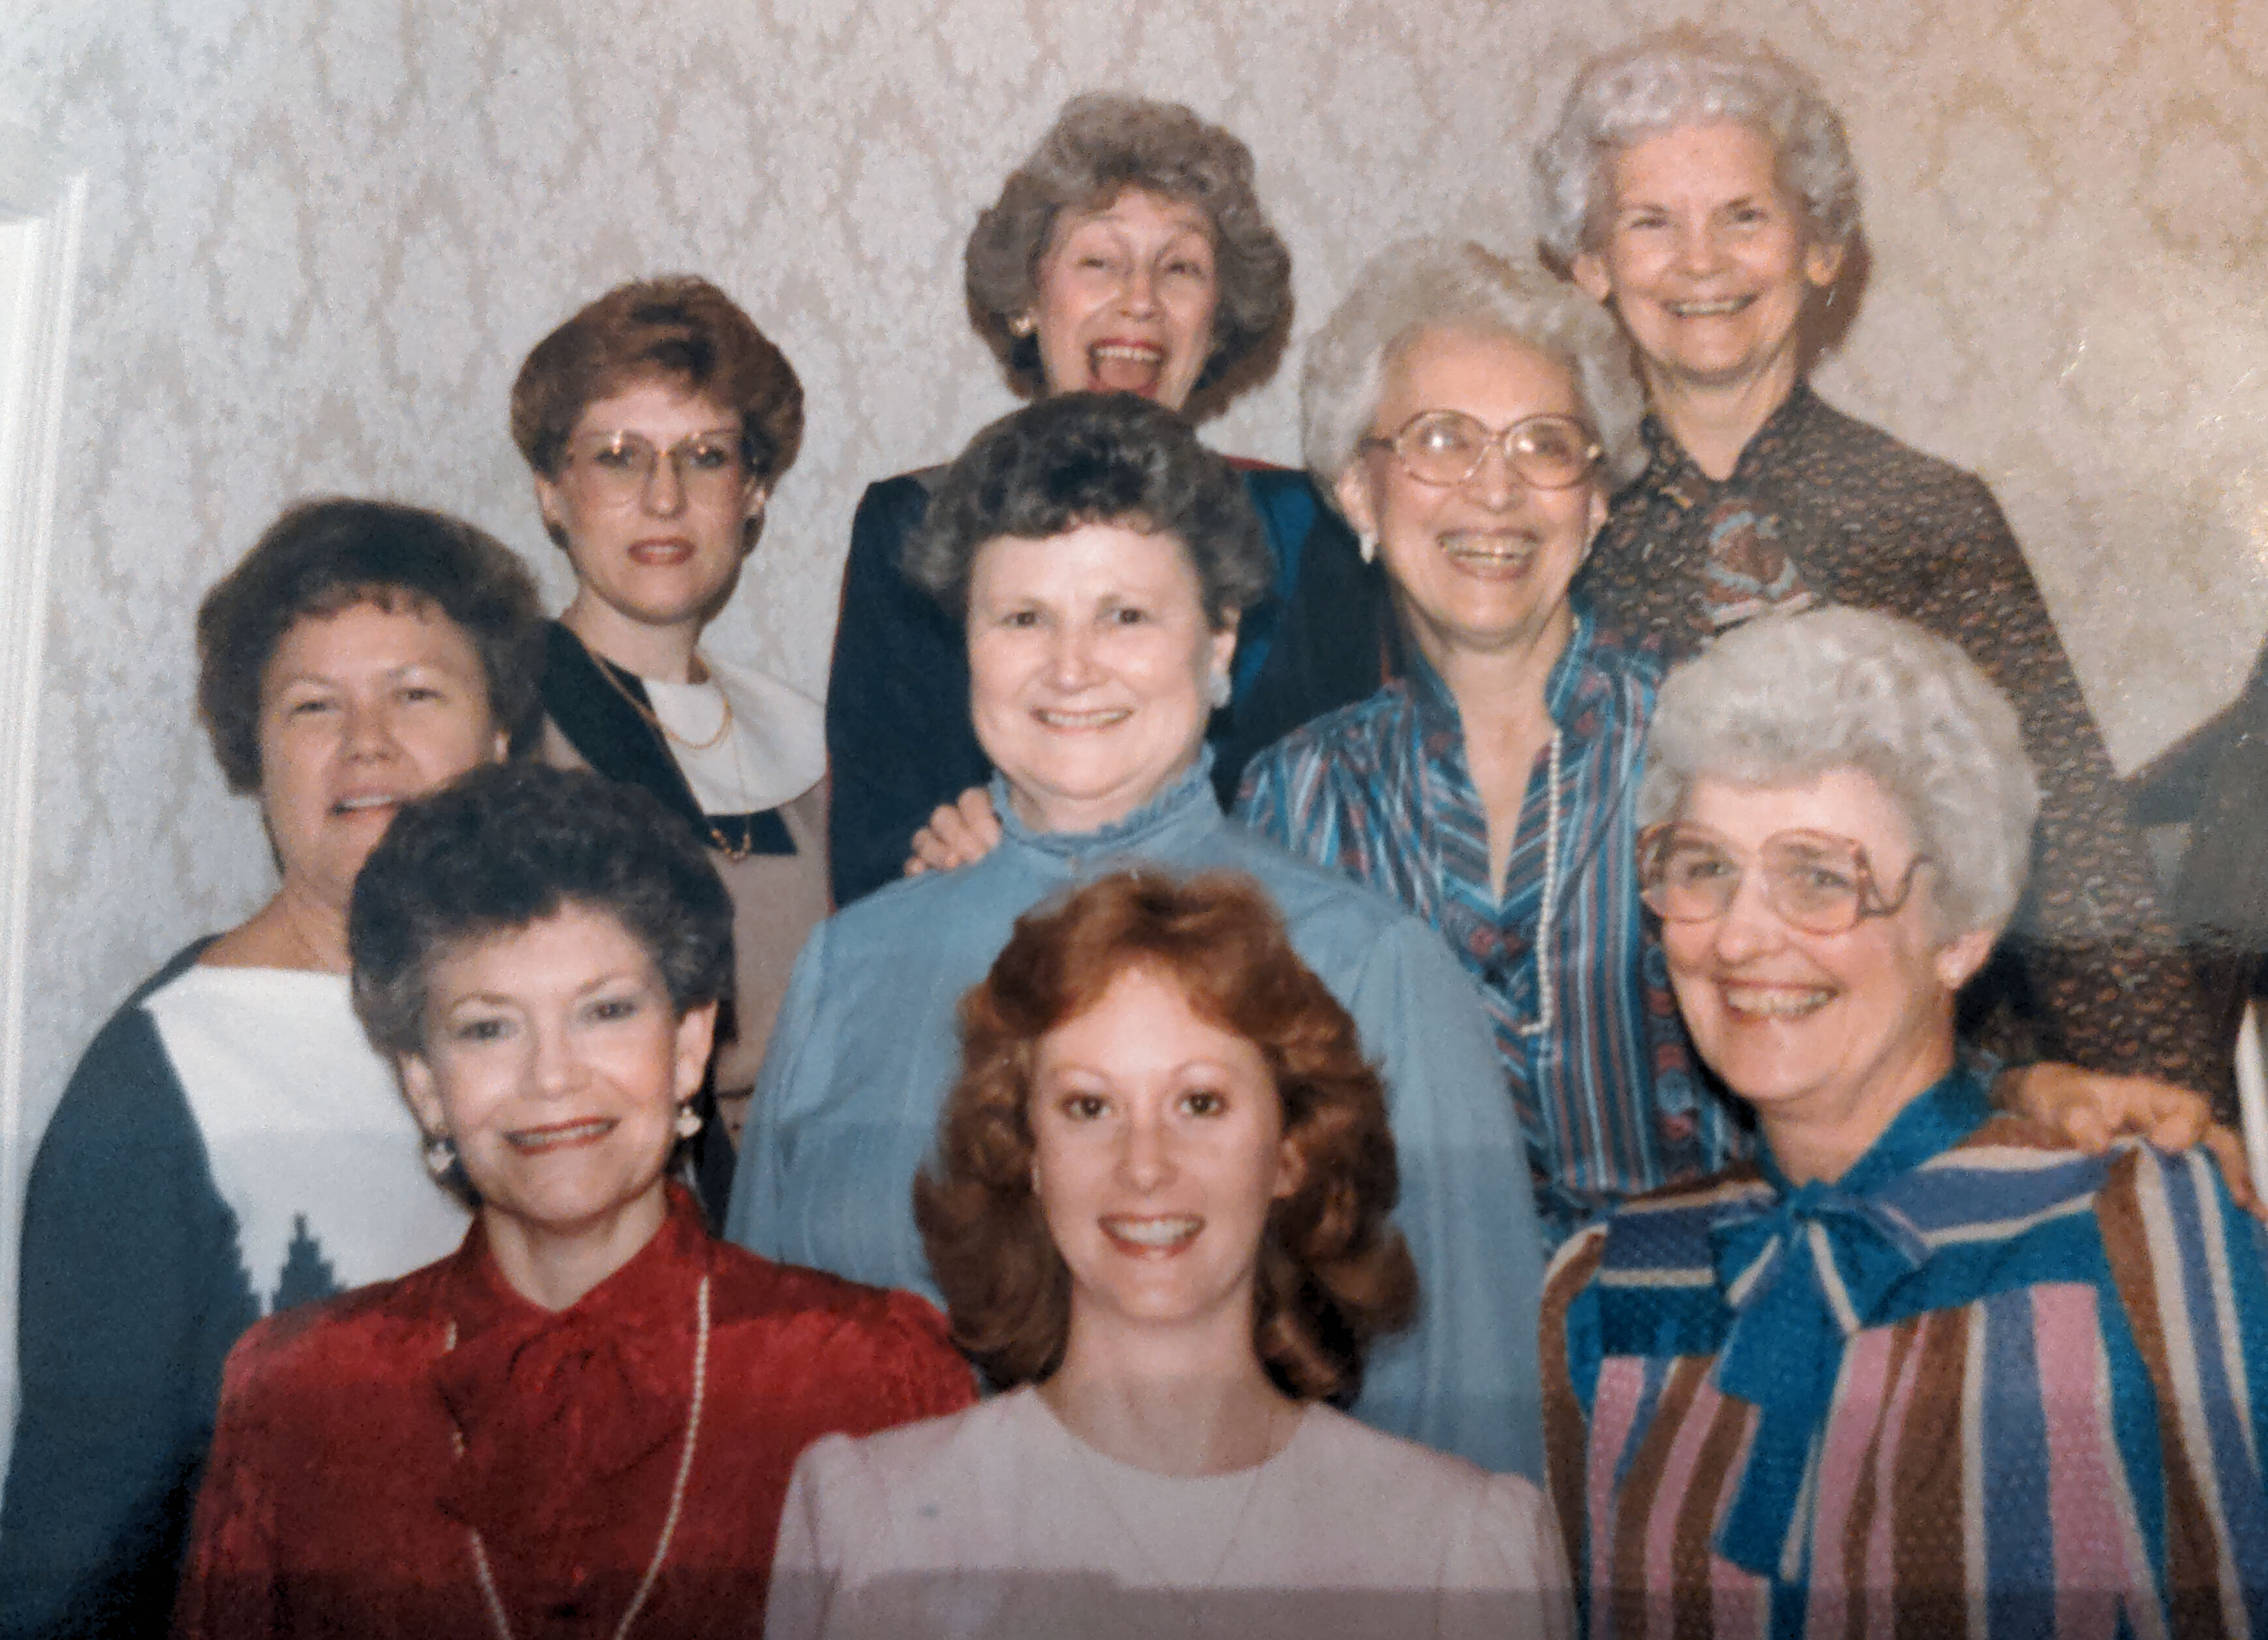 Kim Harris's wedding shower. picture left to right, Barbara Gaskin, Kim Harris, Gwen McGriff. Row 2: Janice Brassell, Louise Minard, Alice Combus, Sissy Harris, Libba Faulkner, Bea Brassell